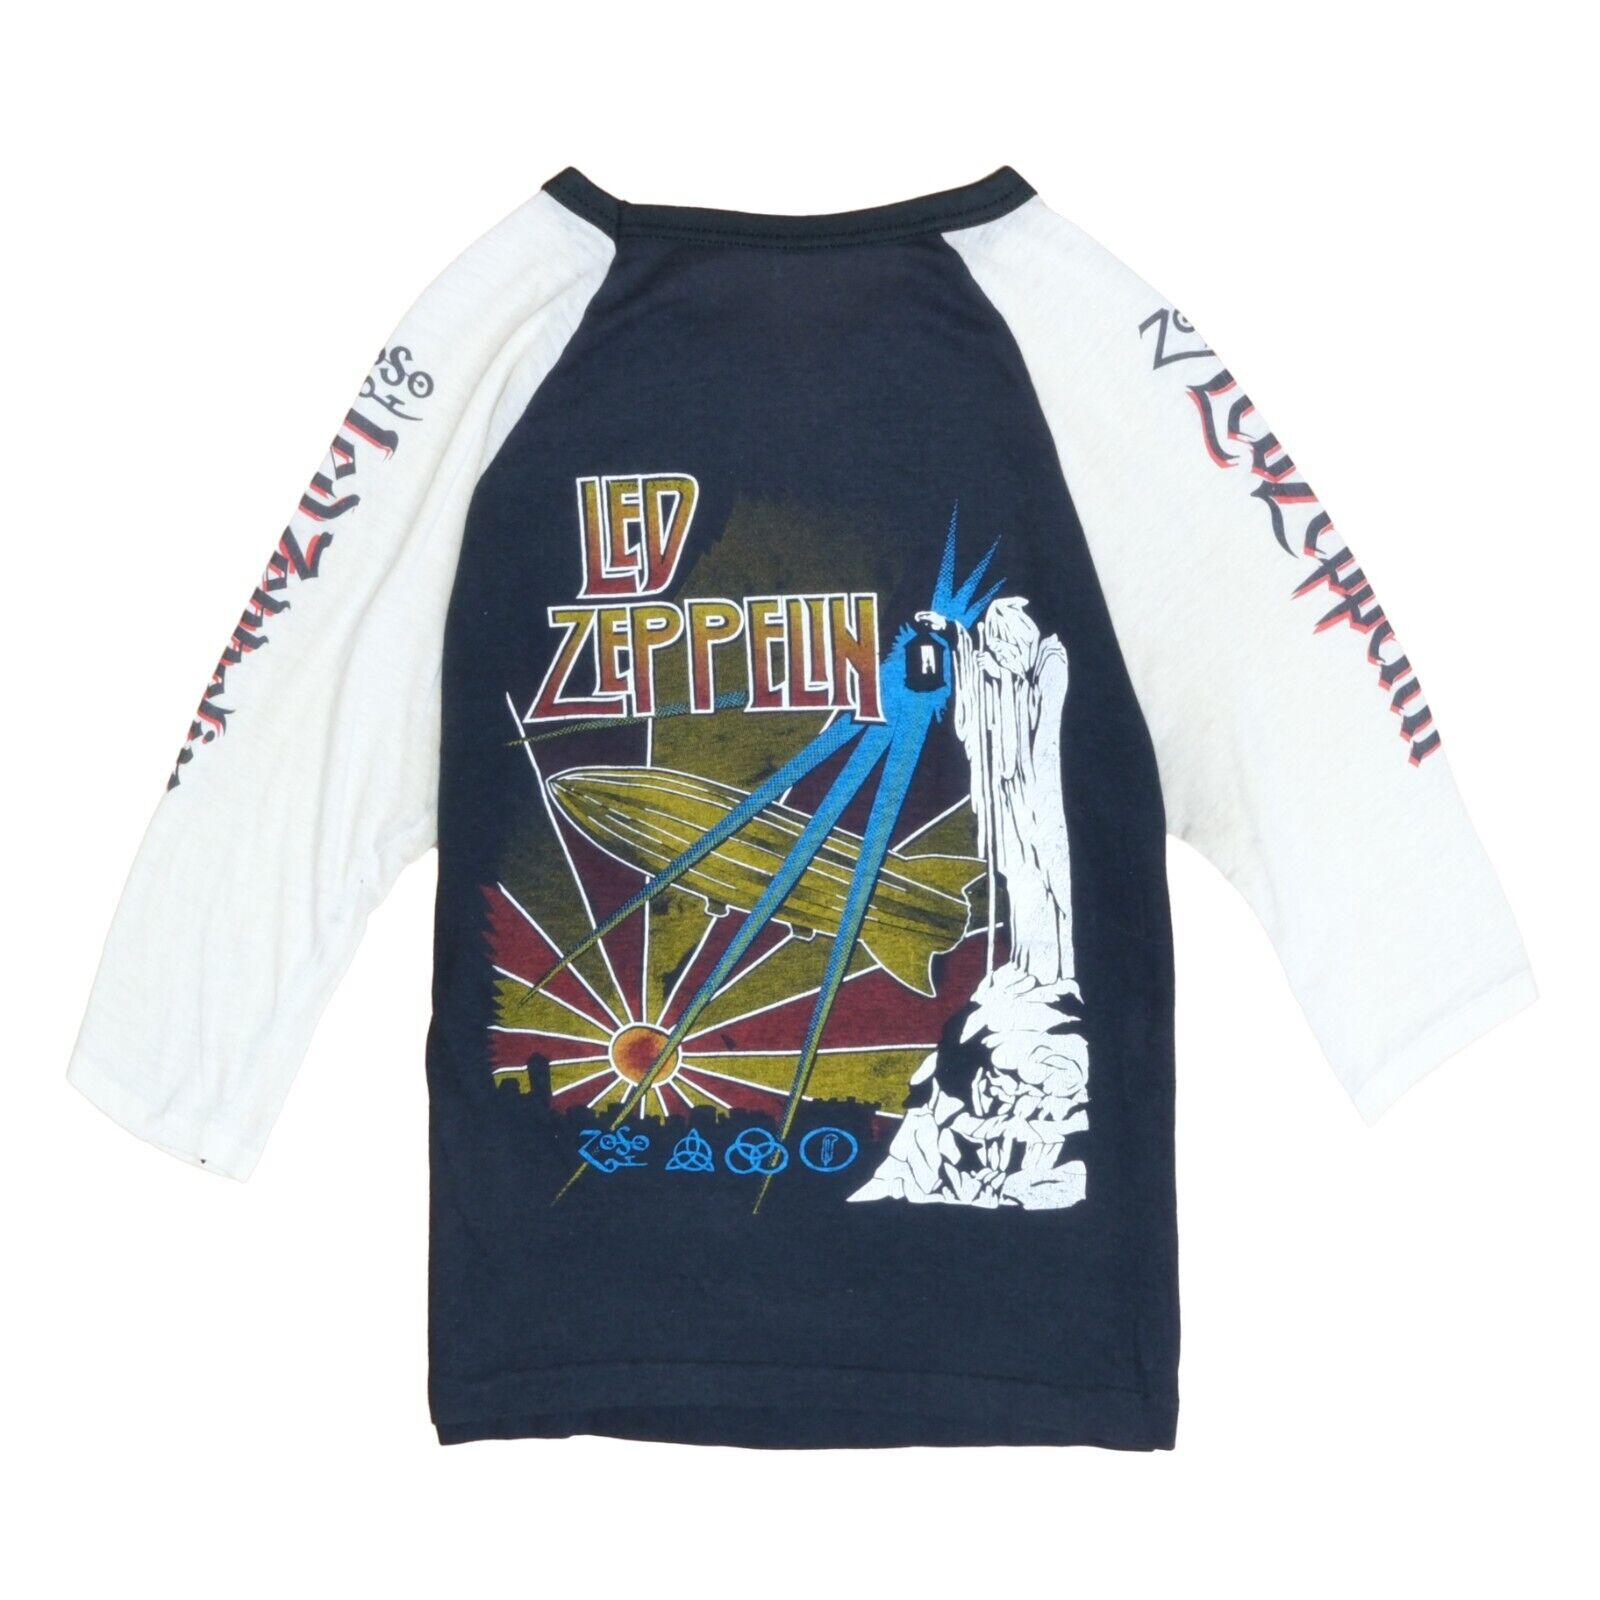 Vintage Led Zeppelin Raglan Baseball T-Shirt Size Small Band Tee